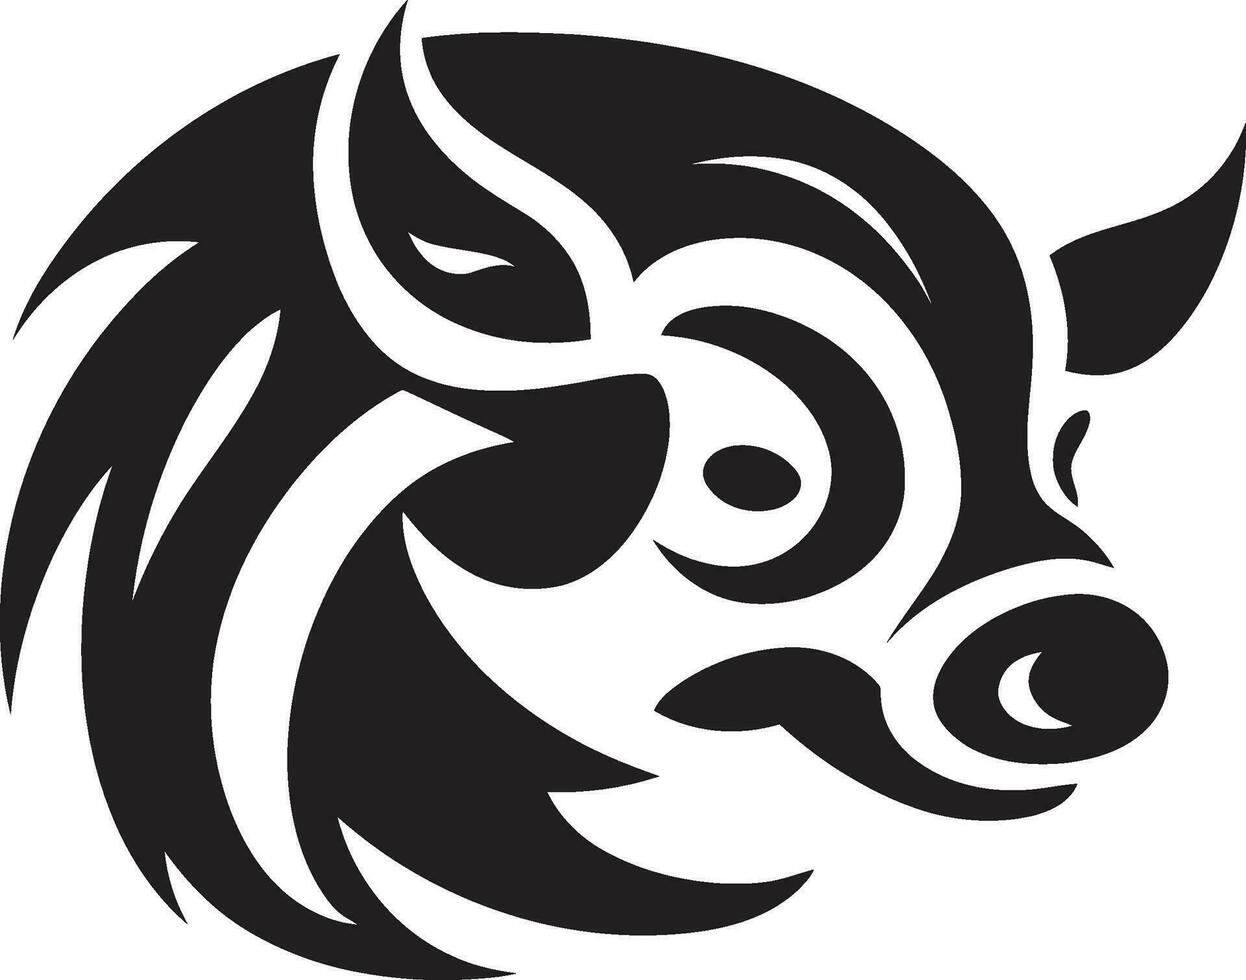 Artistic Pig Logo Concept Minimalist Pork Badge vector